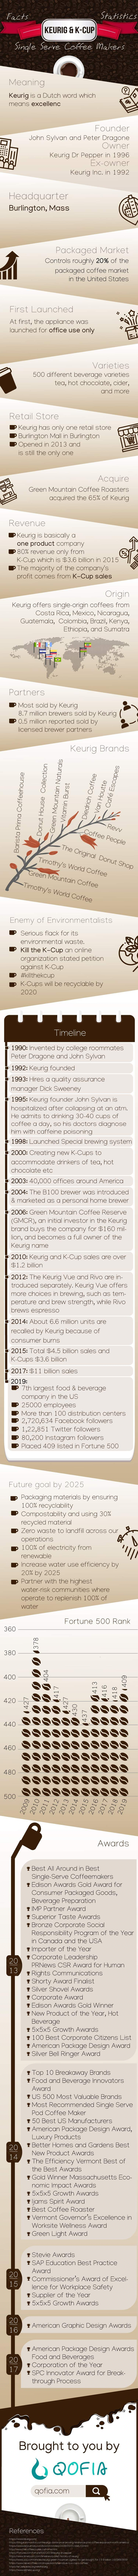 Facts & Statistics of Keurig & K-Cup